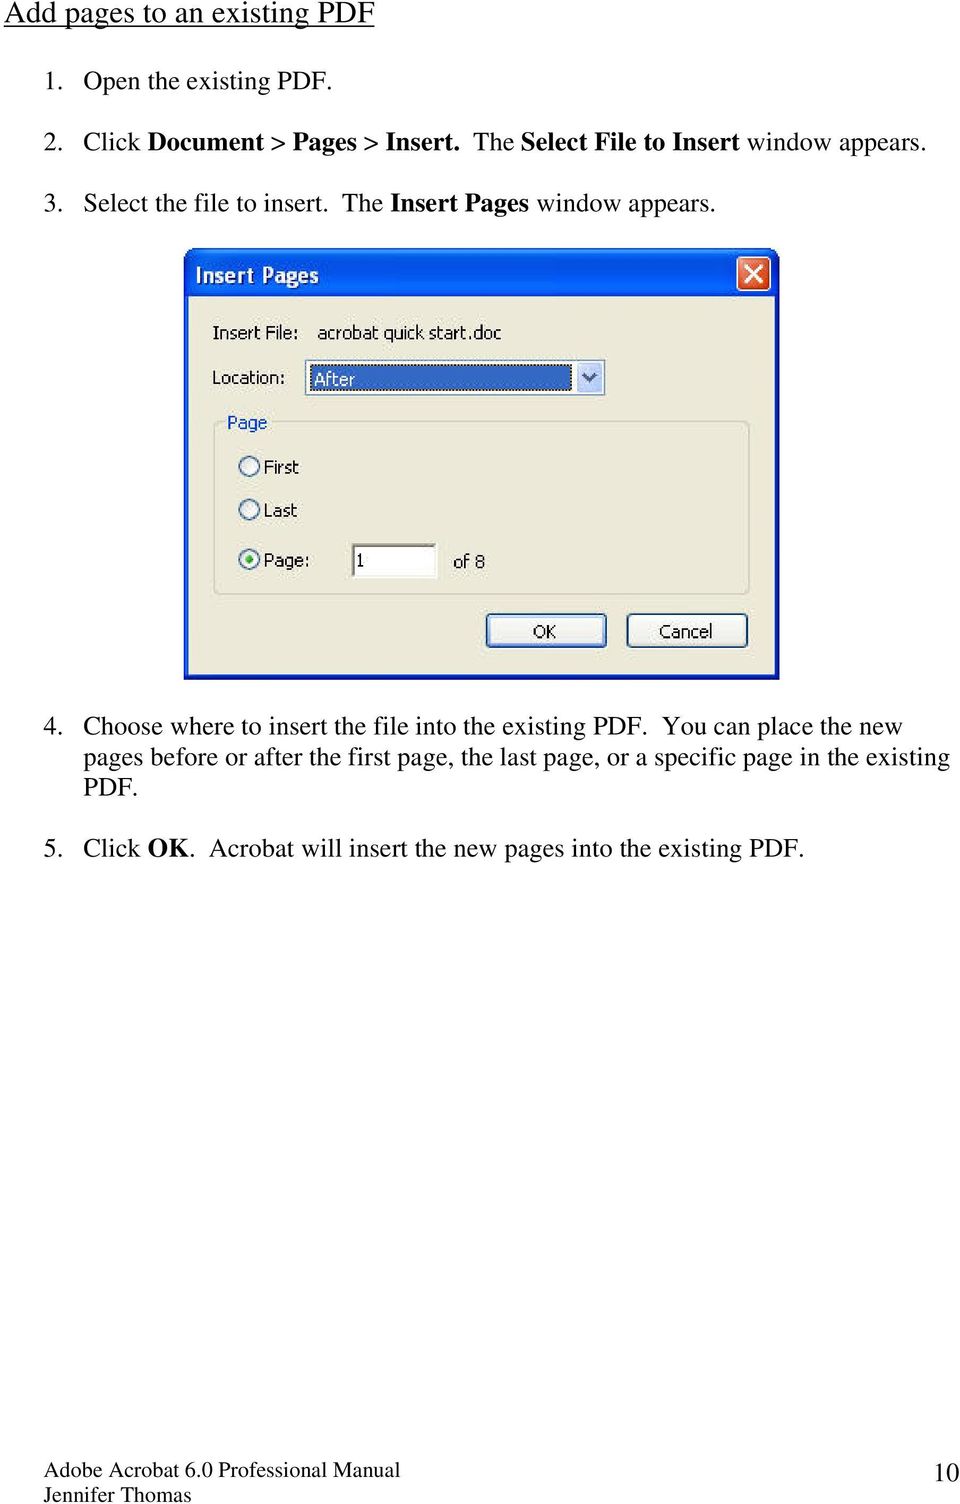 Adobe Acrobat 6.0 Professional - PDF Free Download